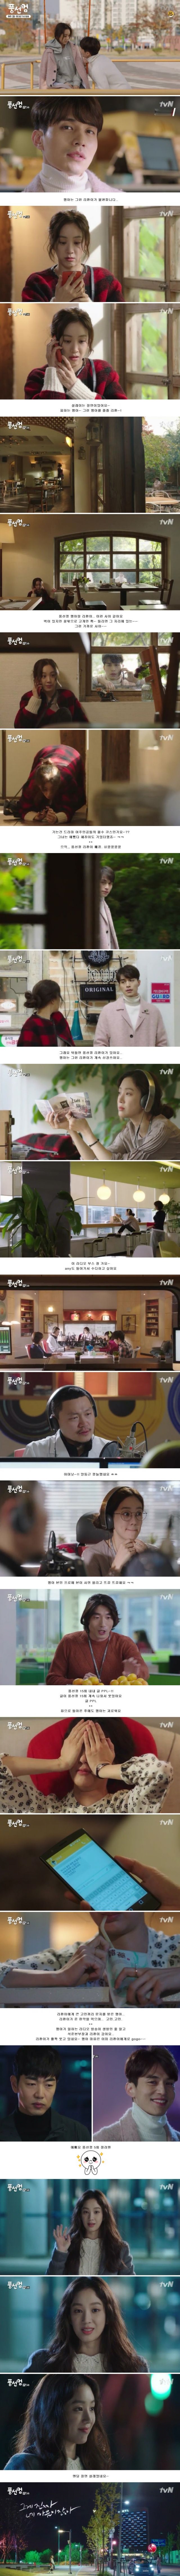 episode 5 captures for the Korean drama 'Bubble Gum'